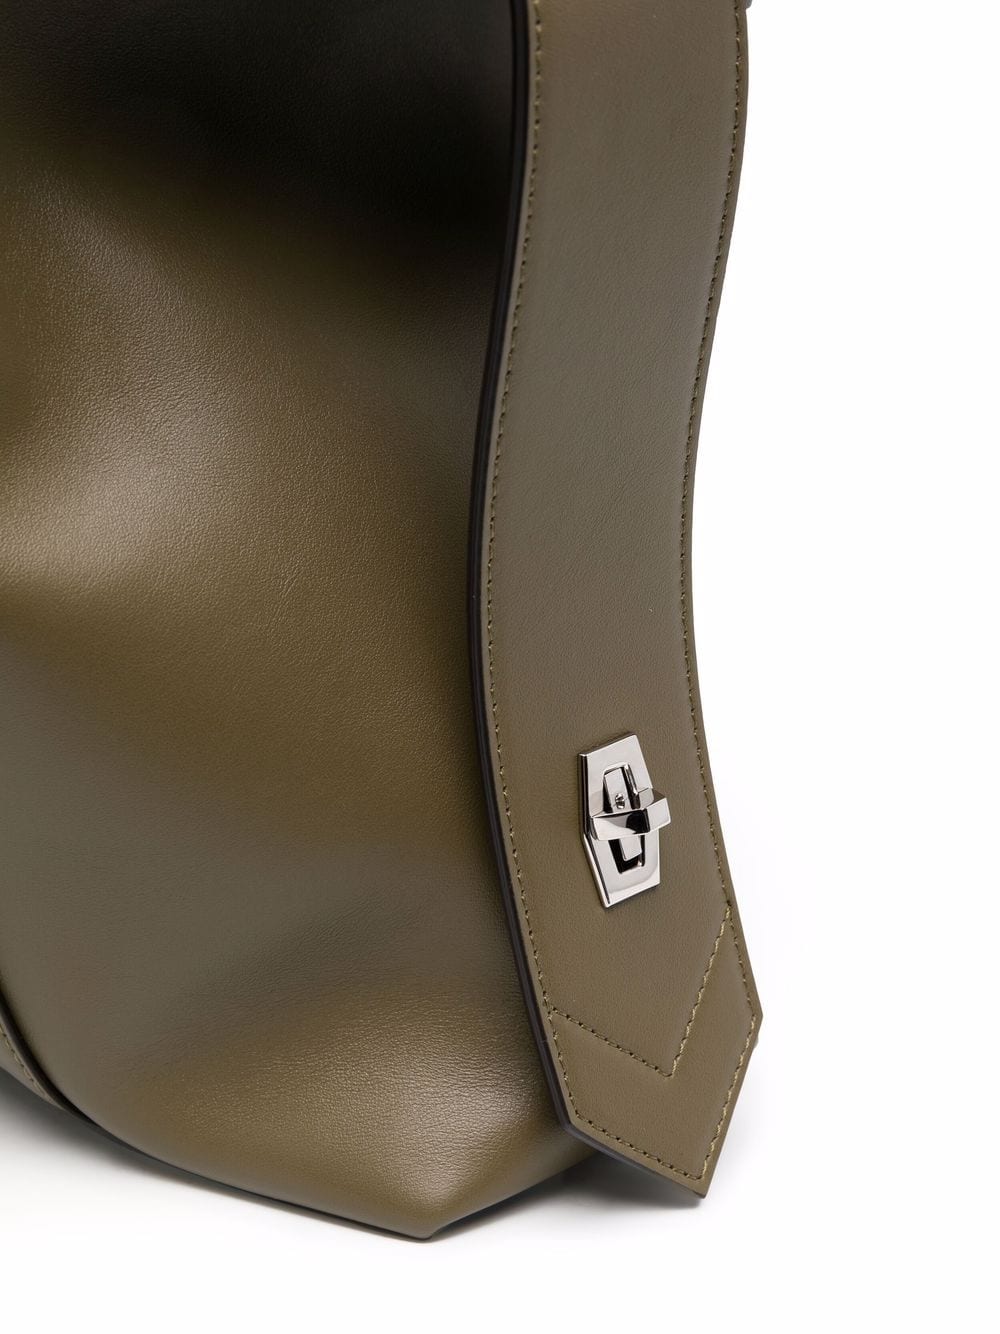 фото Givenchy сумка-тоут antigona среднего размера